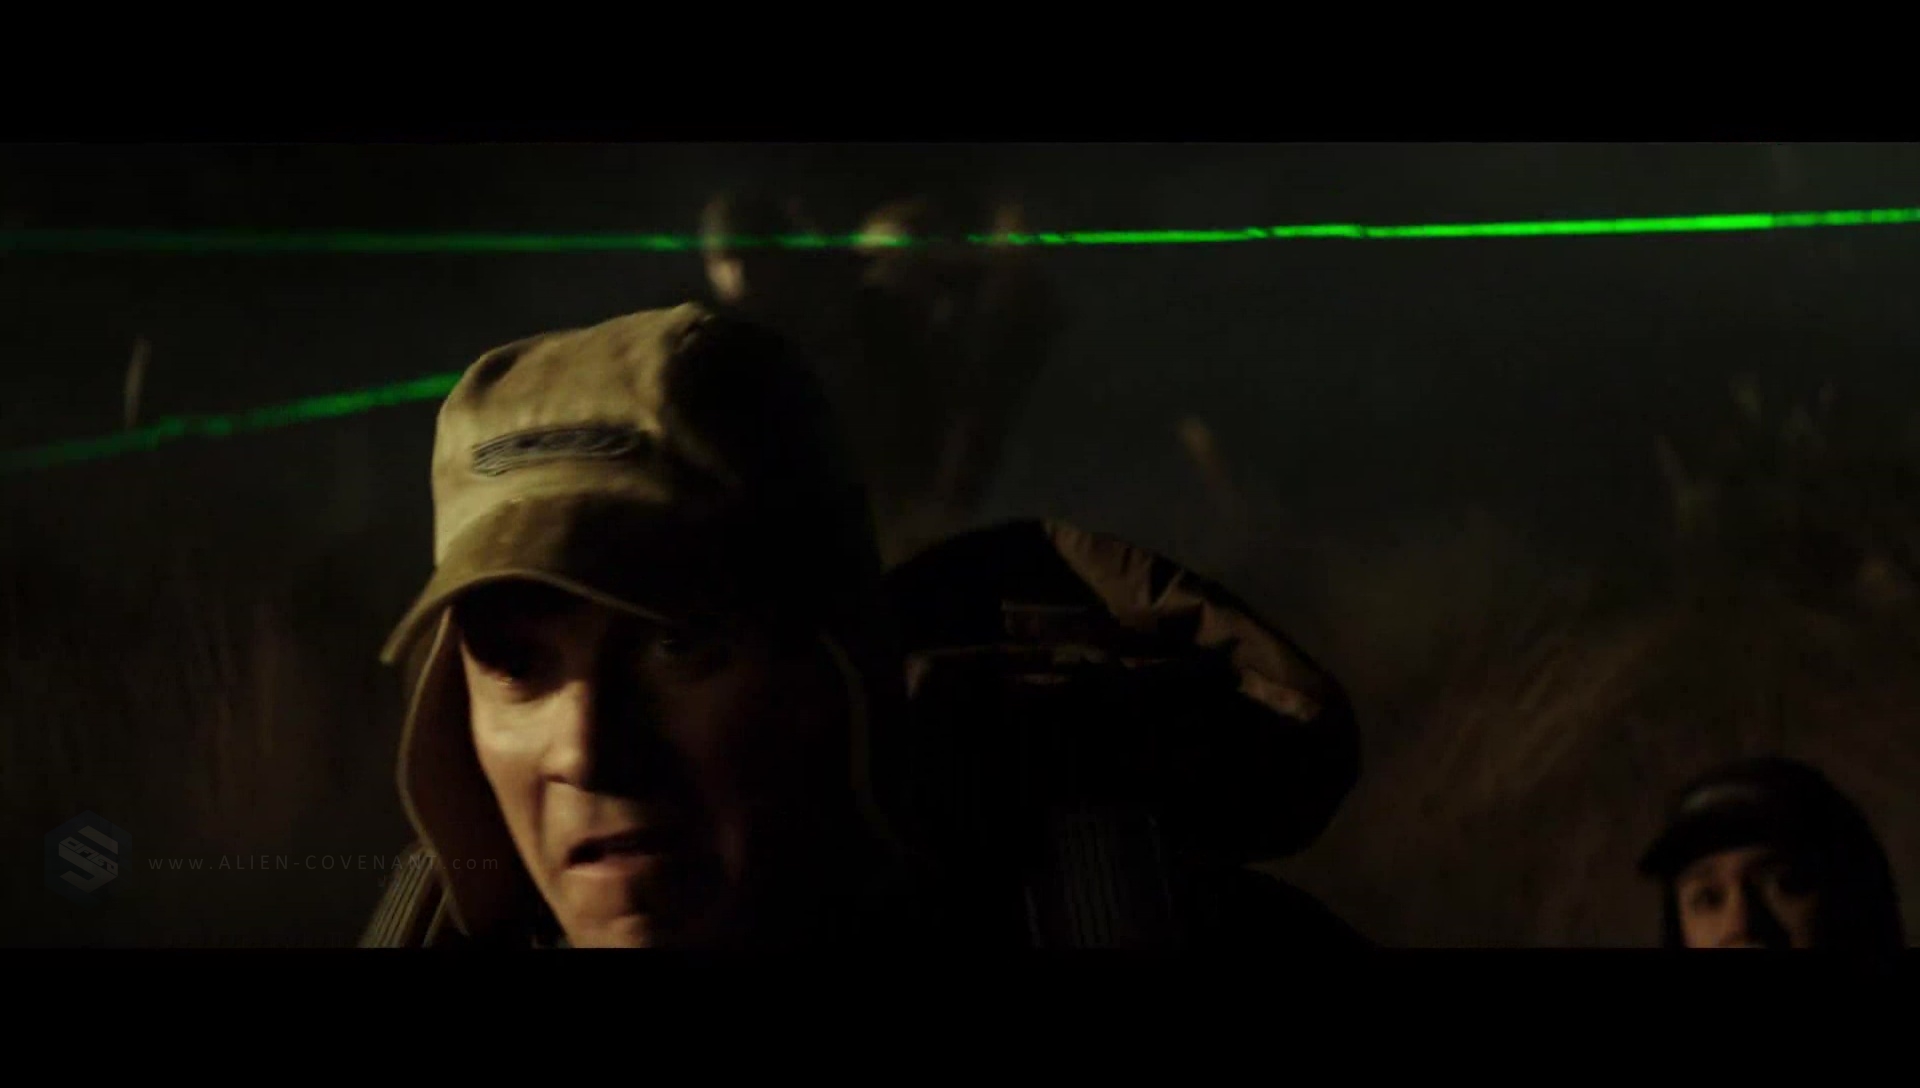 Alien: Covenant Trailer 2 Screenshot